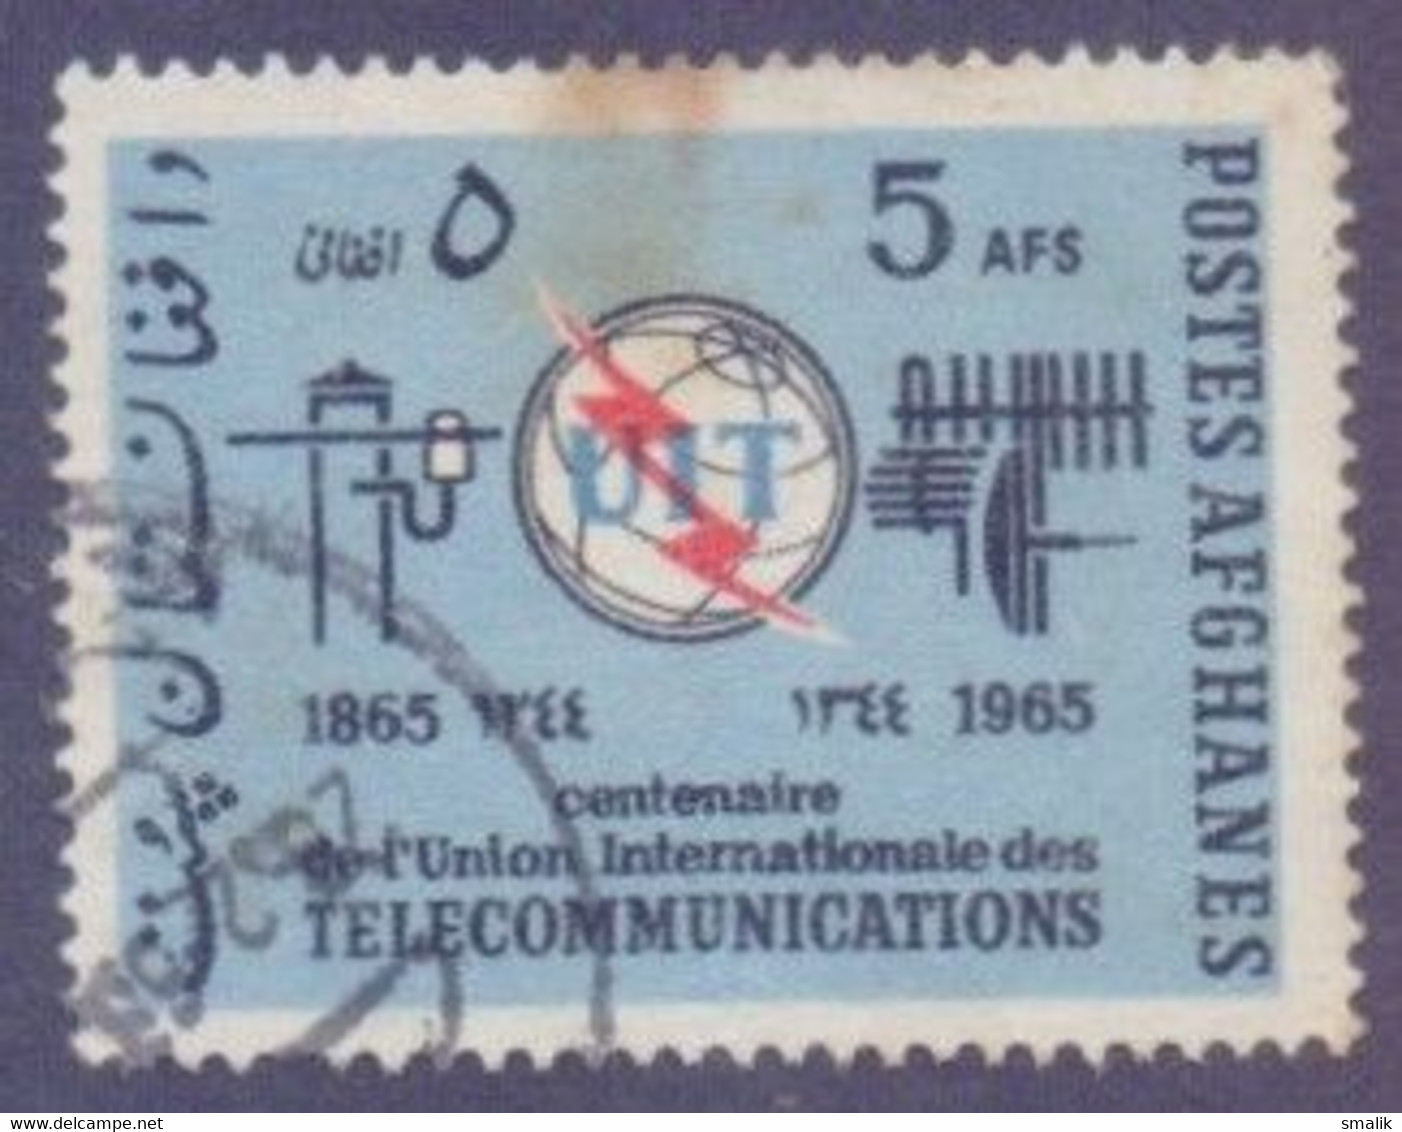 AFGHANISTAN 1965 - UIT International Telecommunications Union, 1v. Fine Used - Afghanistan